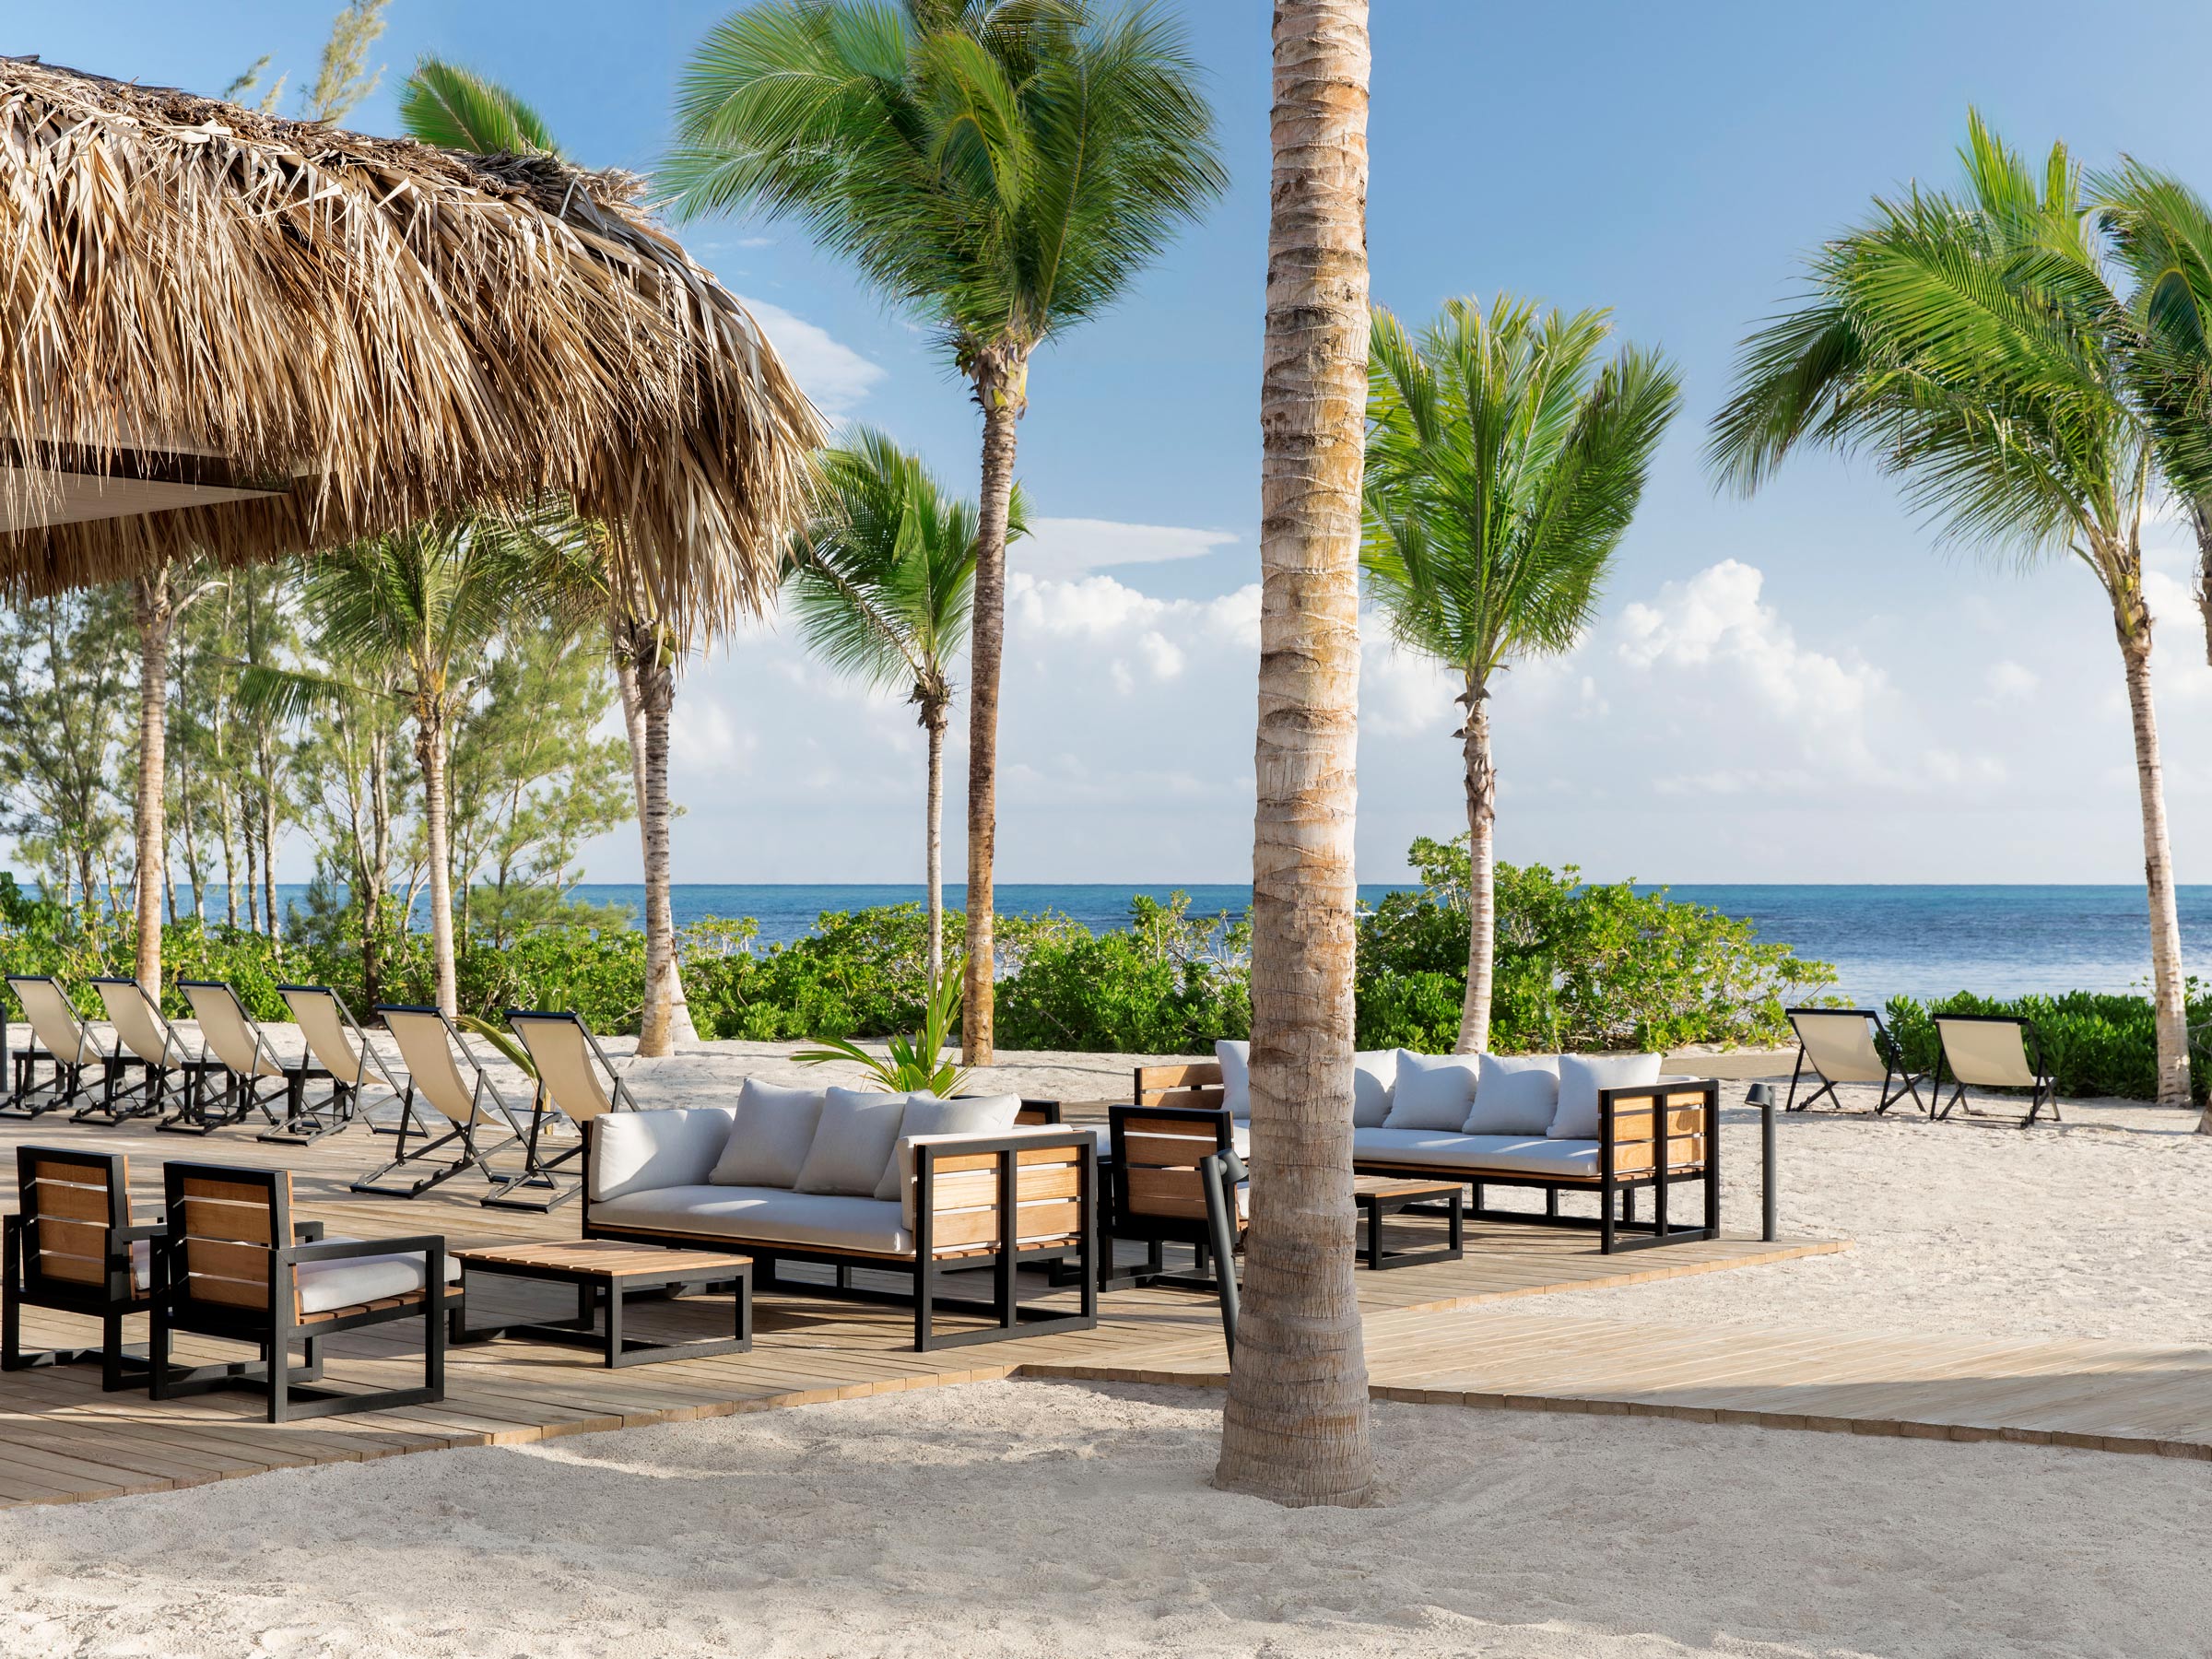 Luxury Beach Bars in Jamaica